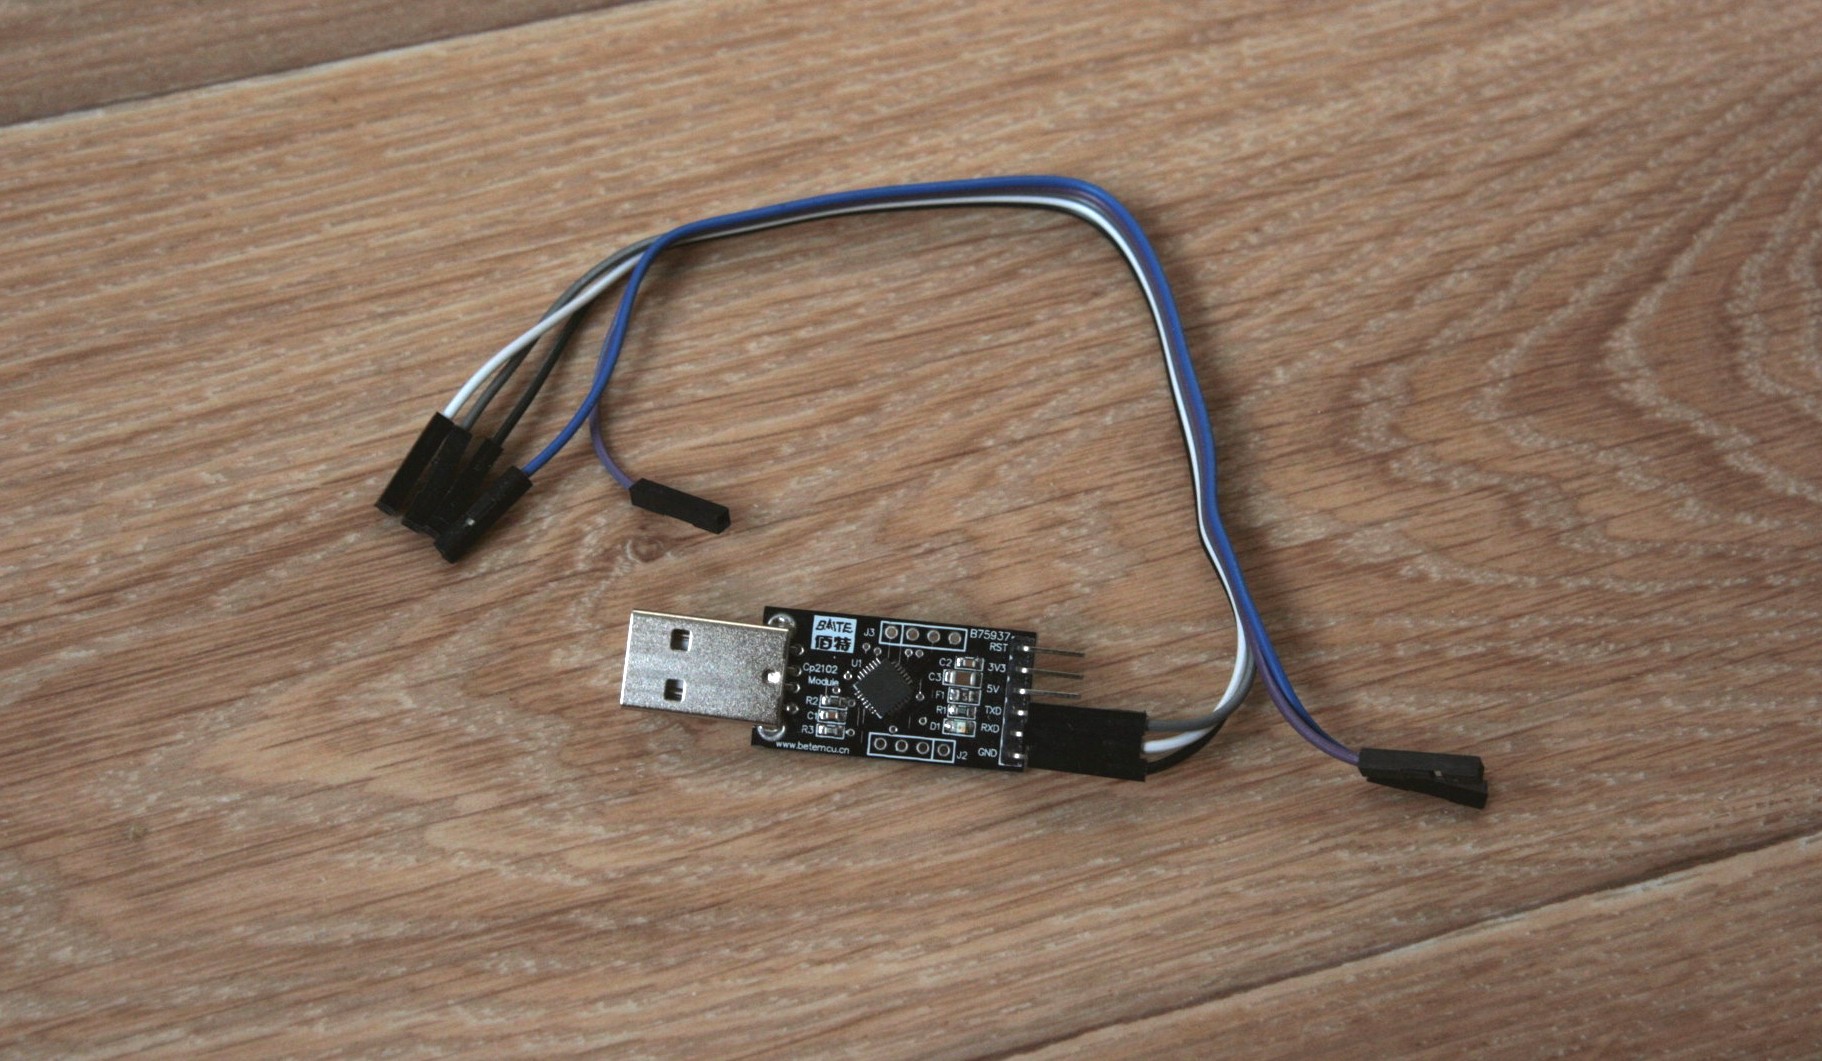 USB to UART adapter